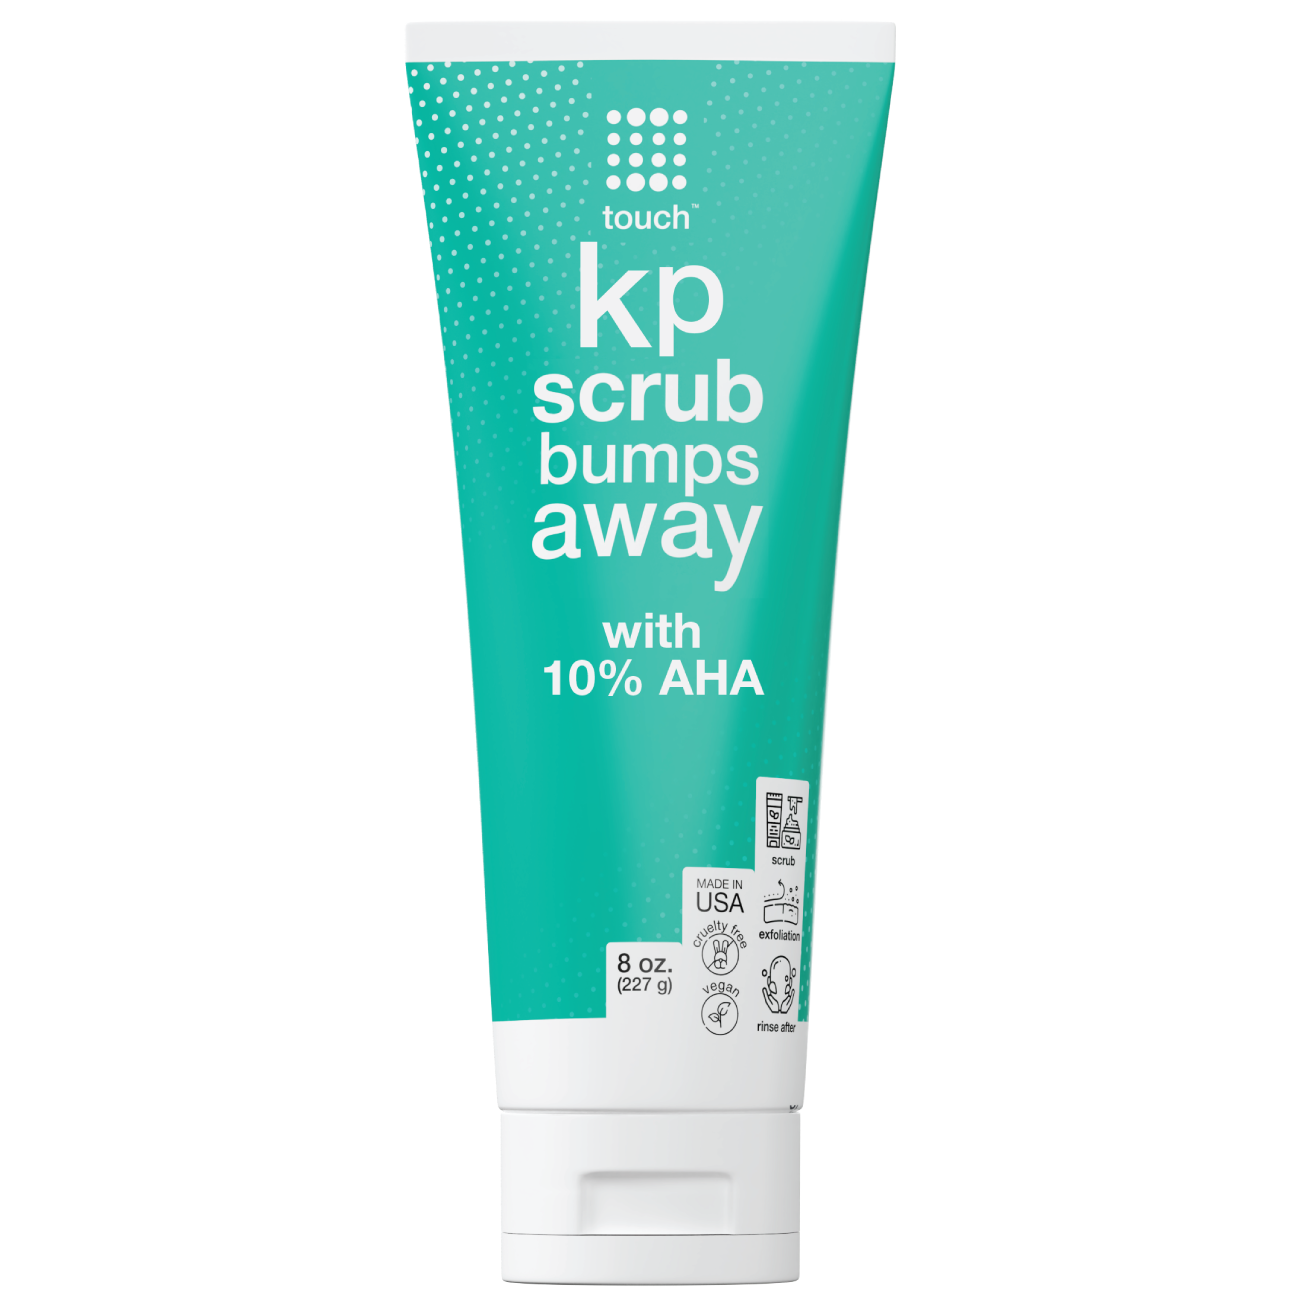 KP Scrub Bumps Away Exfoliating Rough & Bumpy Skin Body Scrub for Keratosis Pilaris with 10% AHA - 8 oz